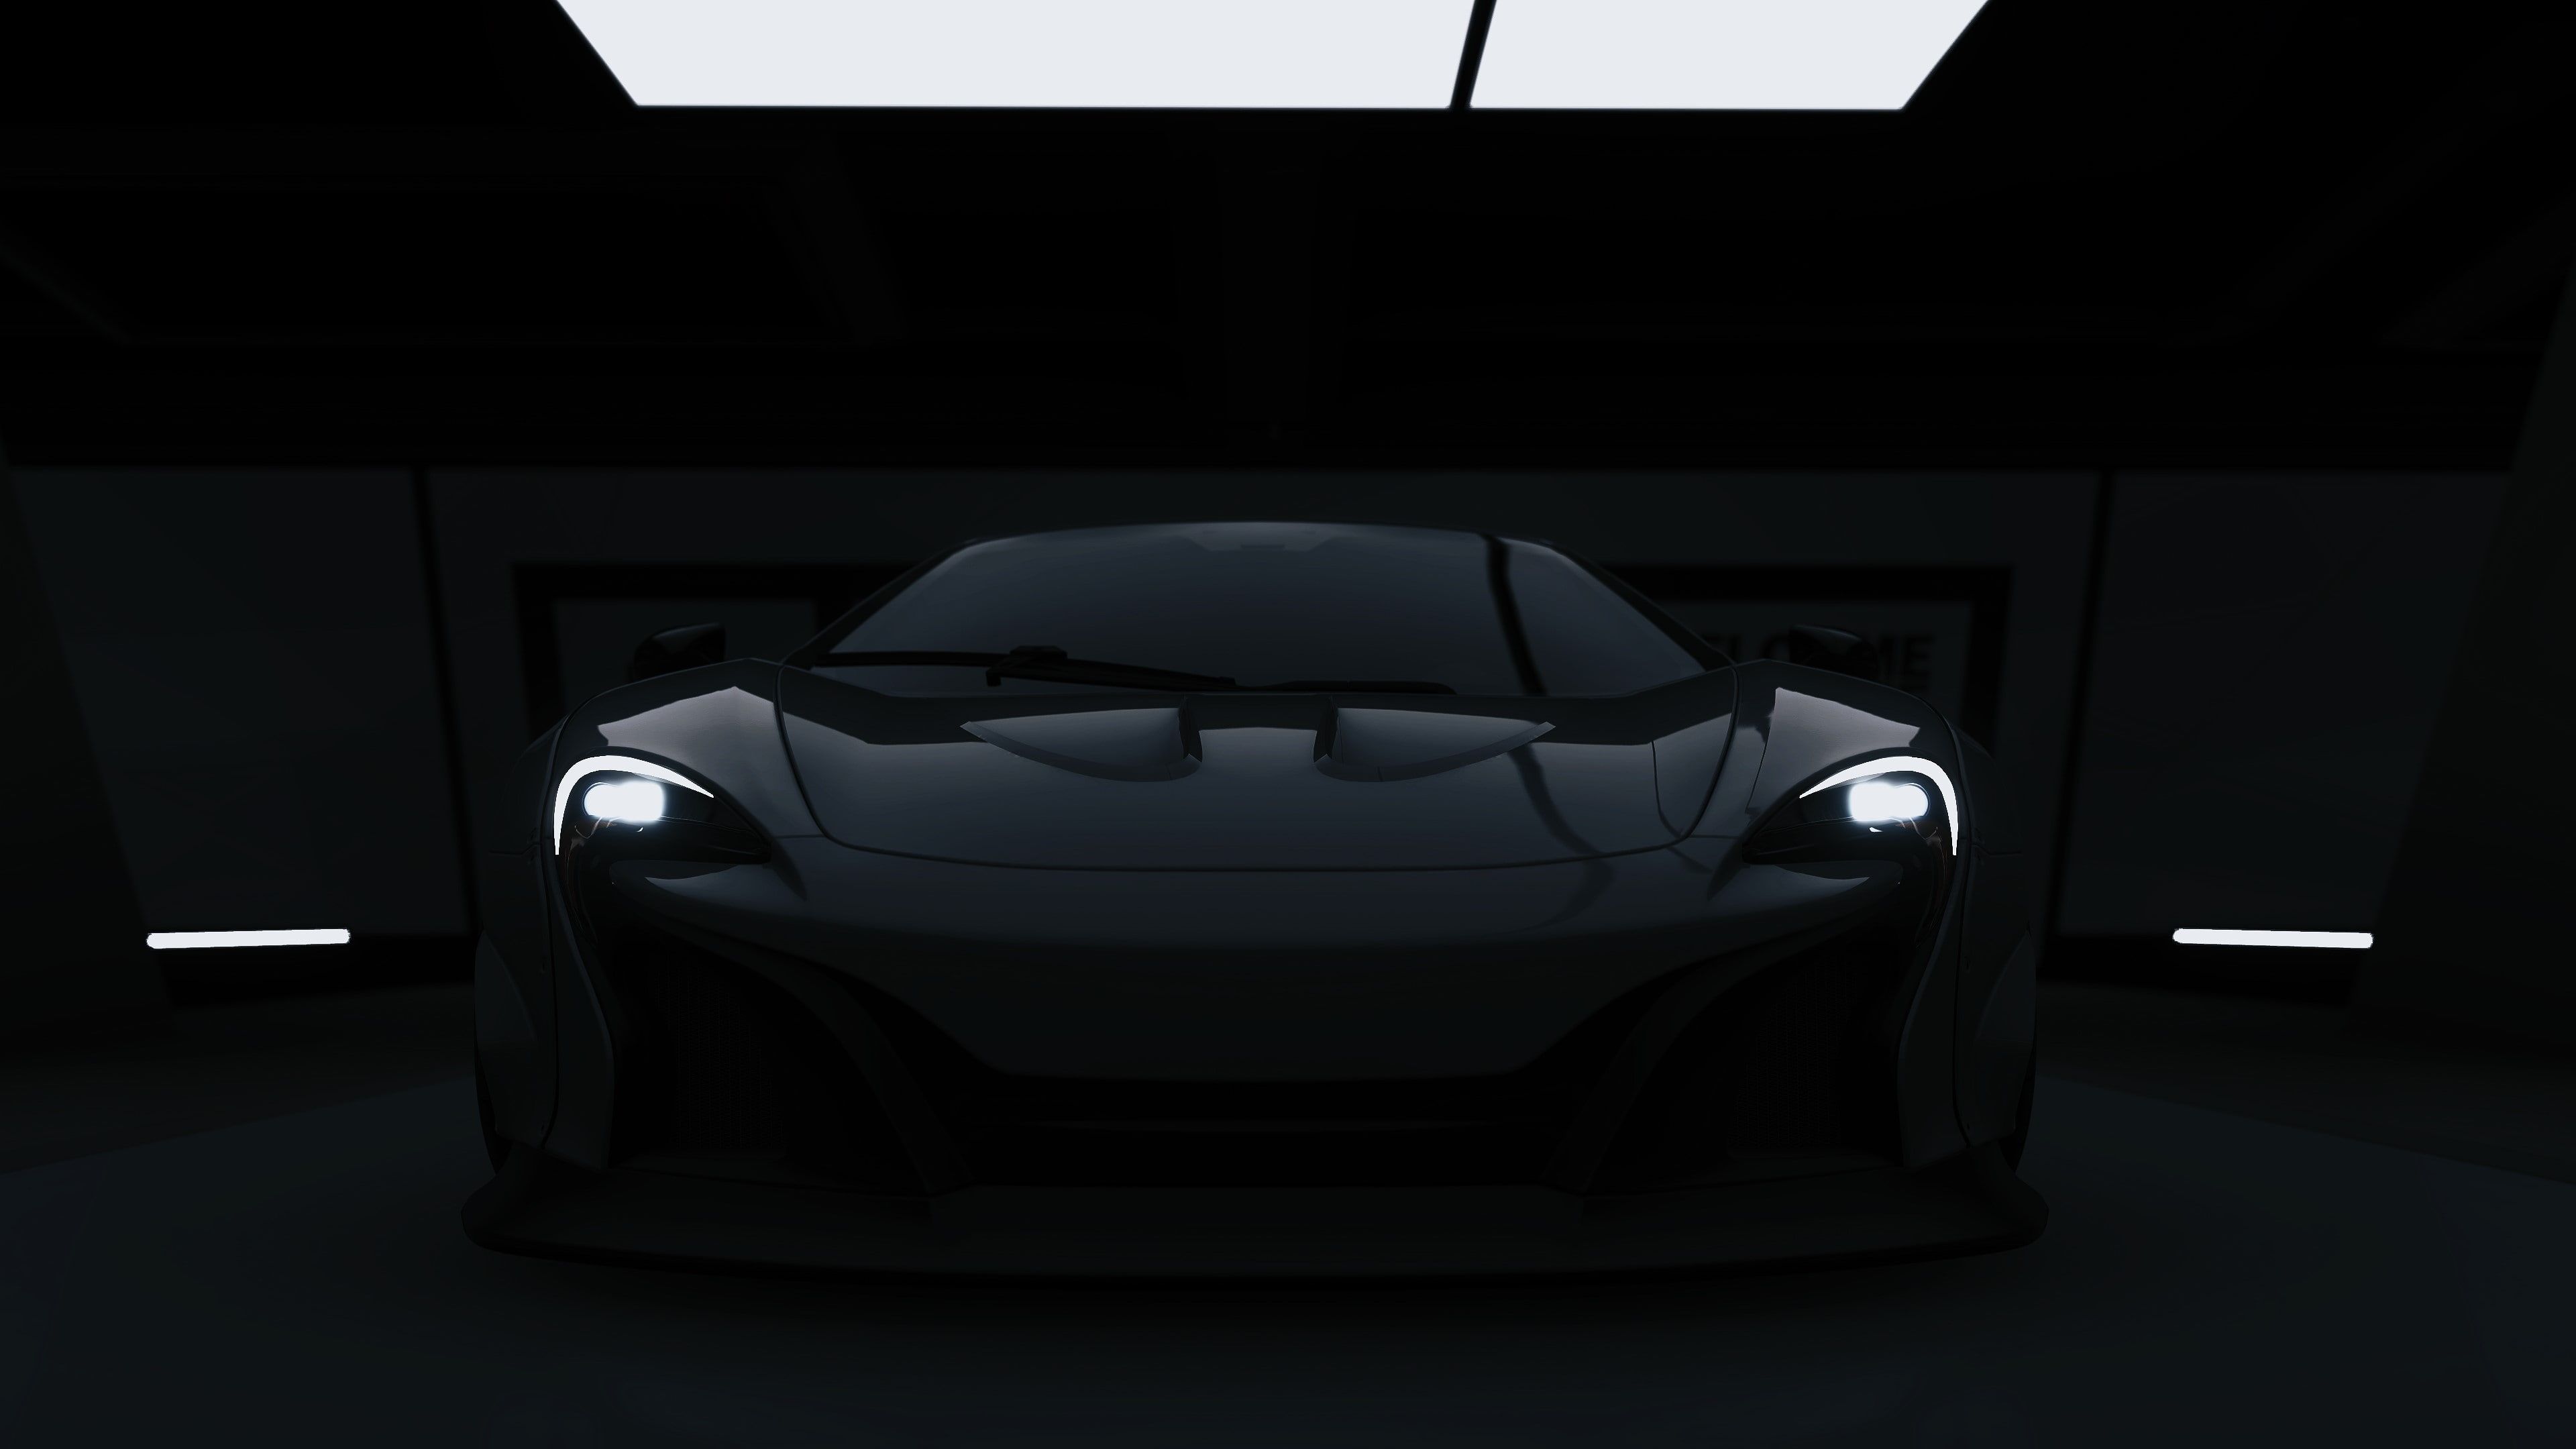 Forza Horizon 4 #Forza #dark #car #vehicle video games K #wallpaper #hdwallpaper #desktop. Forza, Forza horizon Car wallpaper